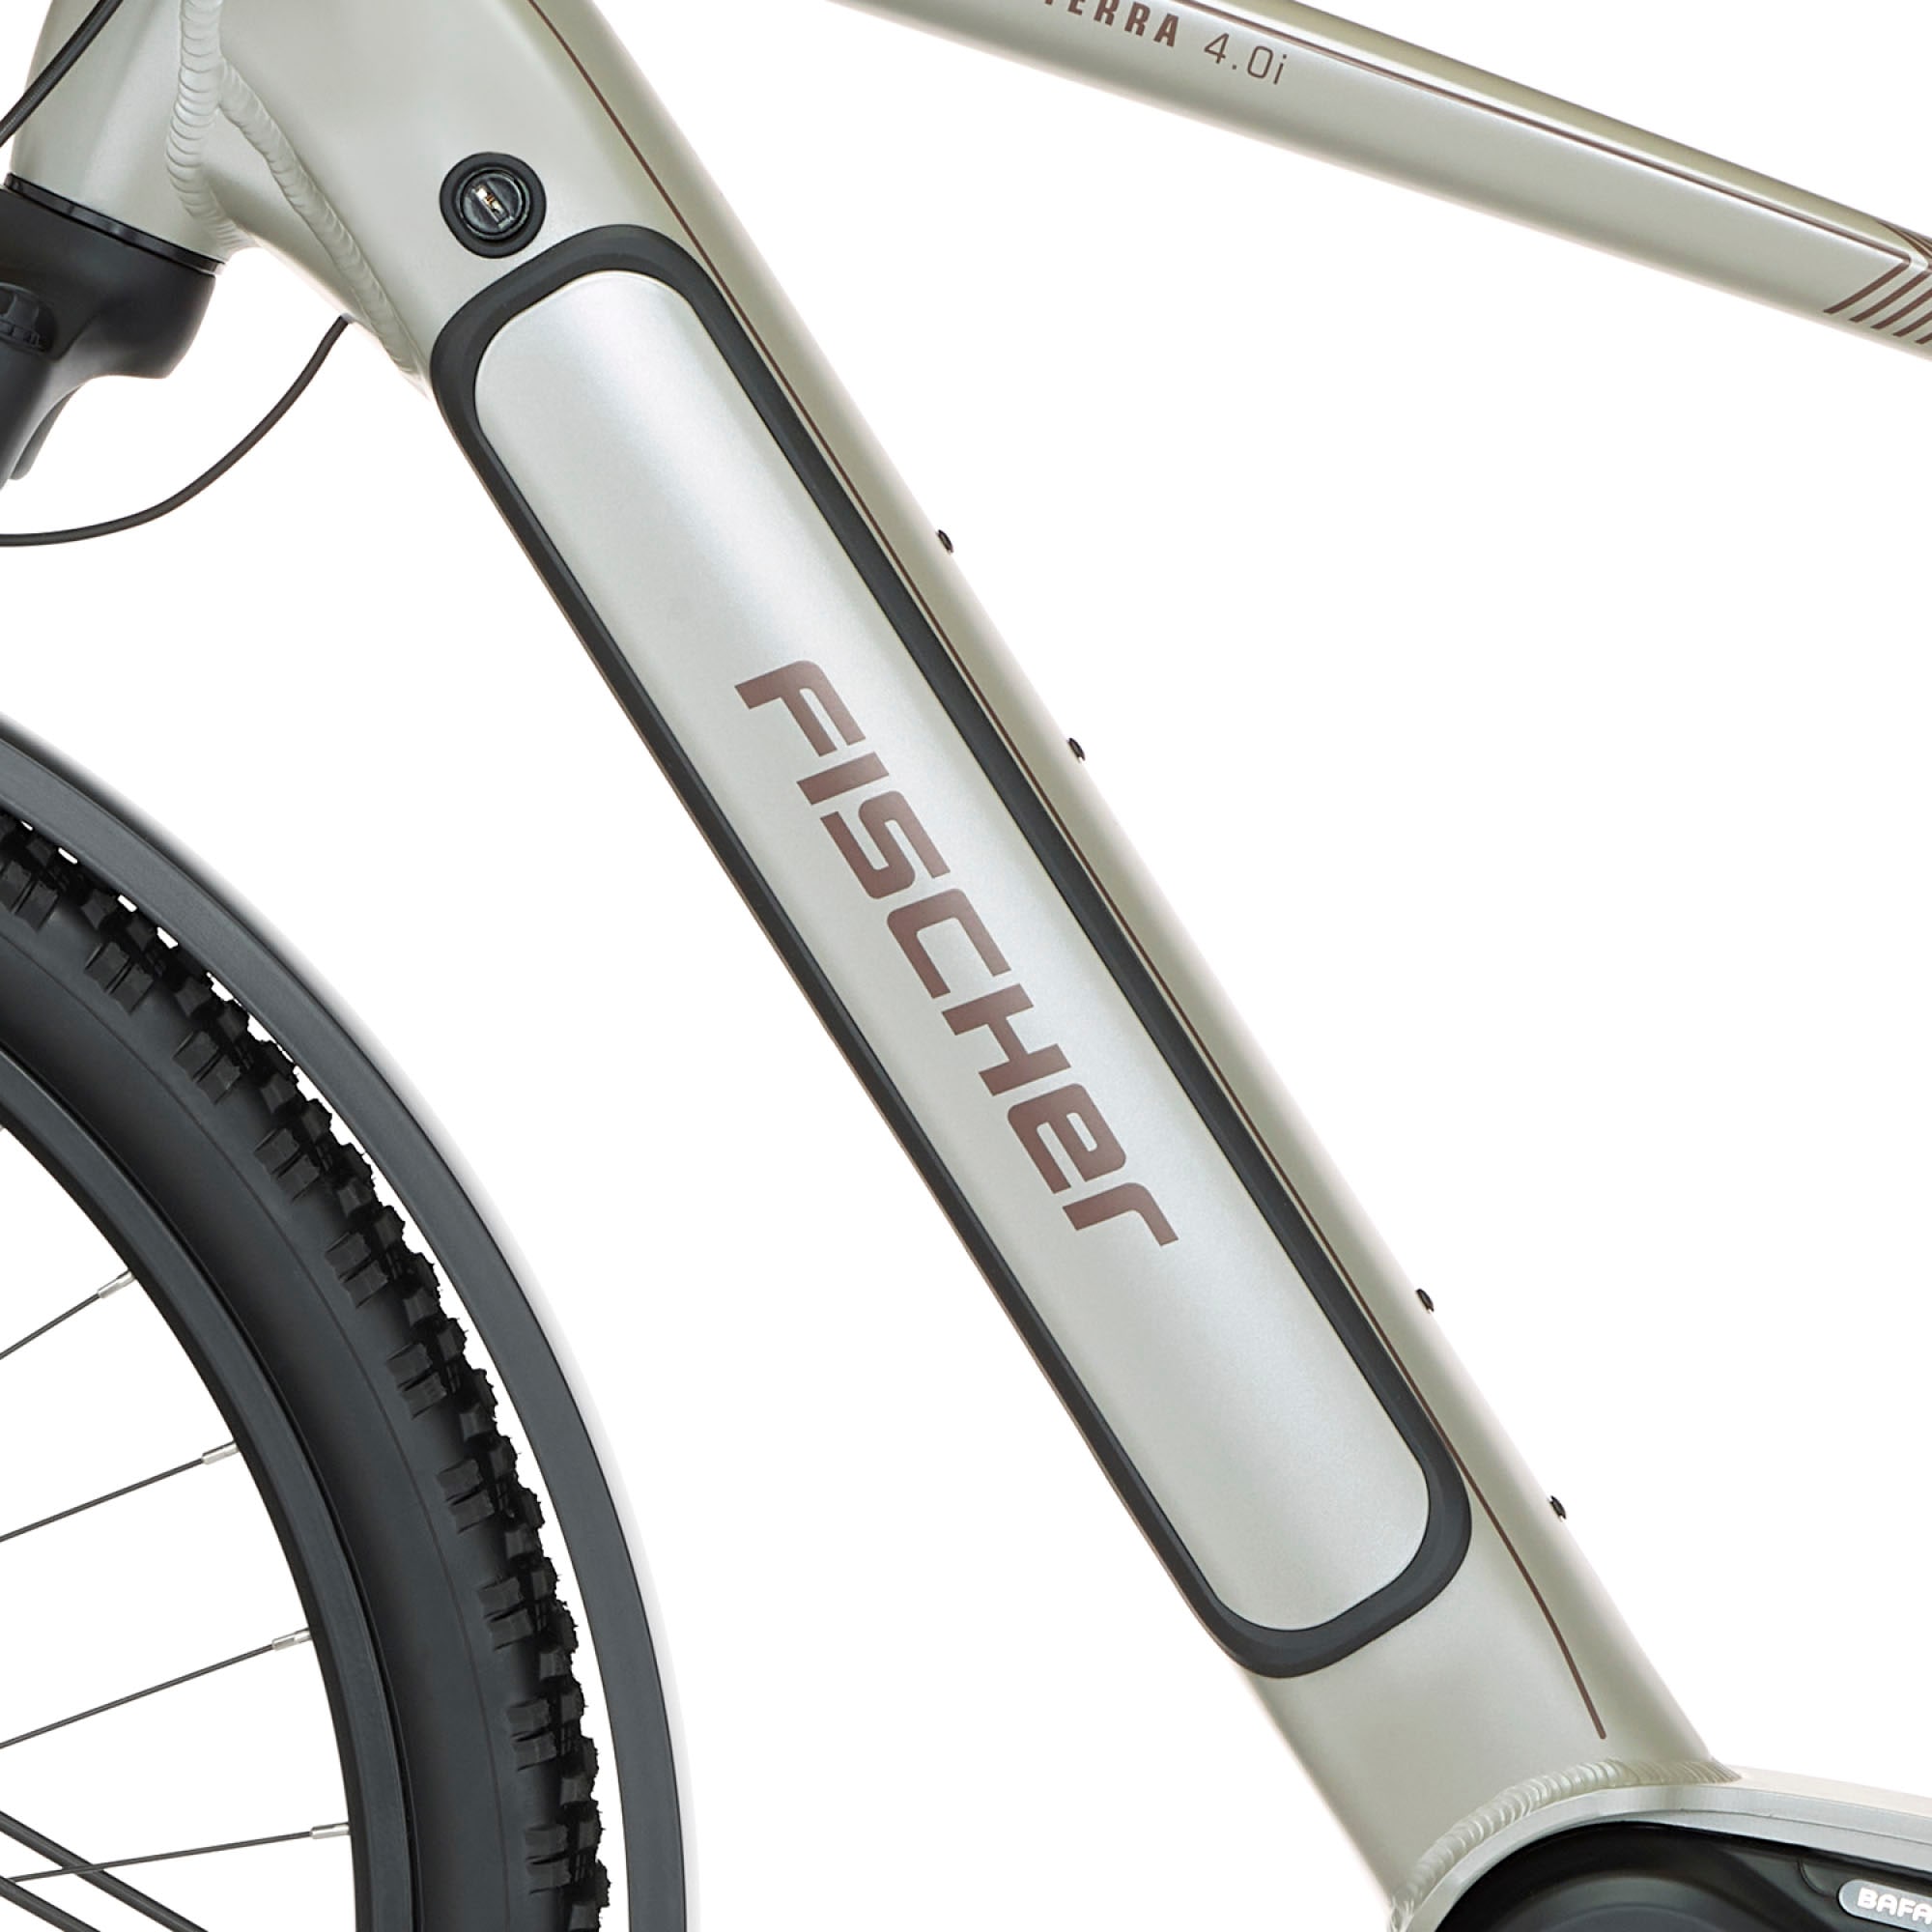 FISCHER Fahrrad E-Bike »TERRA 4.0i 55«, 10 Gang, Shimano, Deore, Mittelmotor 250 W, (mit Fahrradschloss), Pedelec